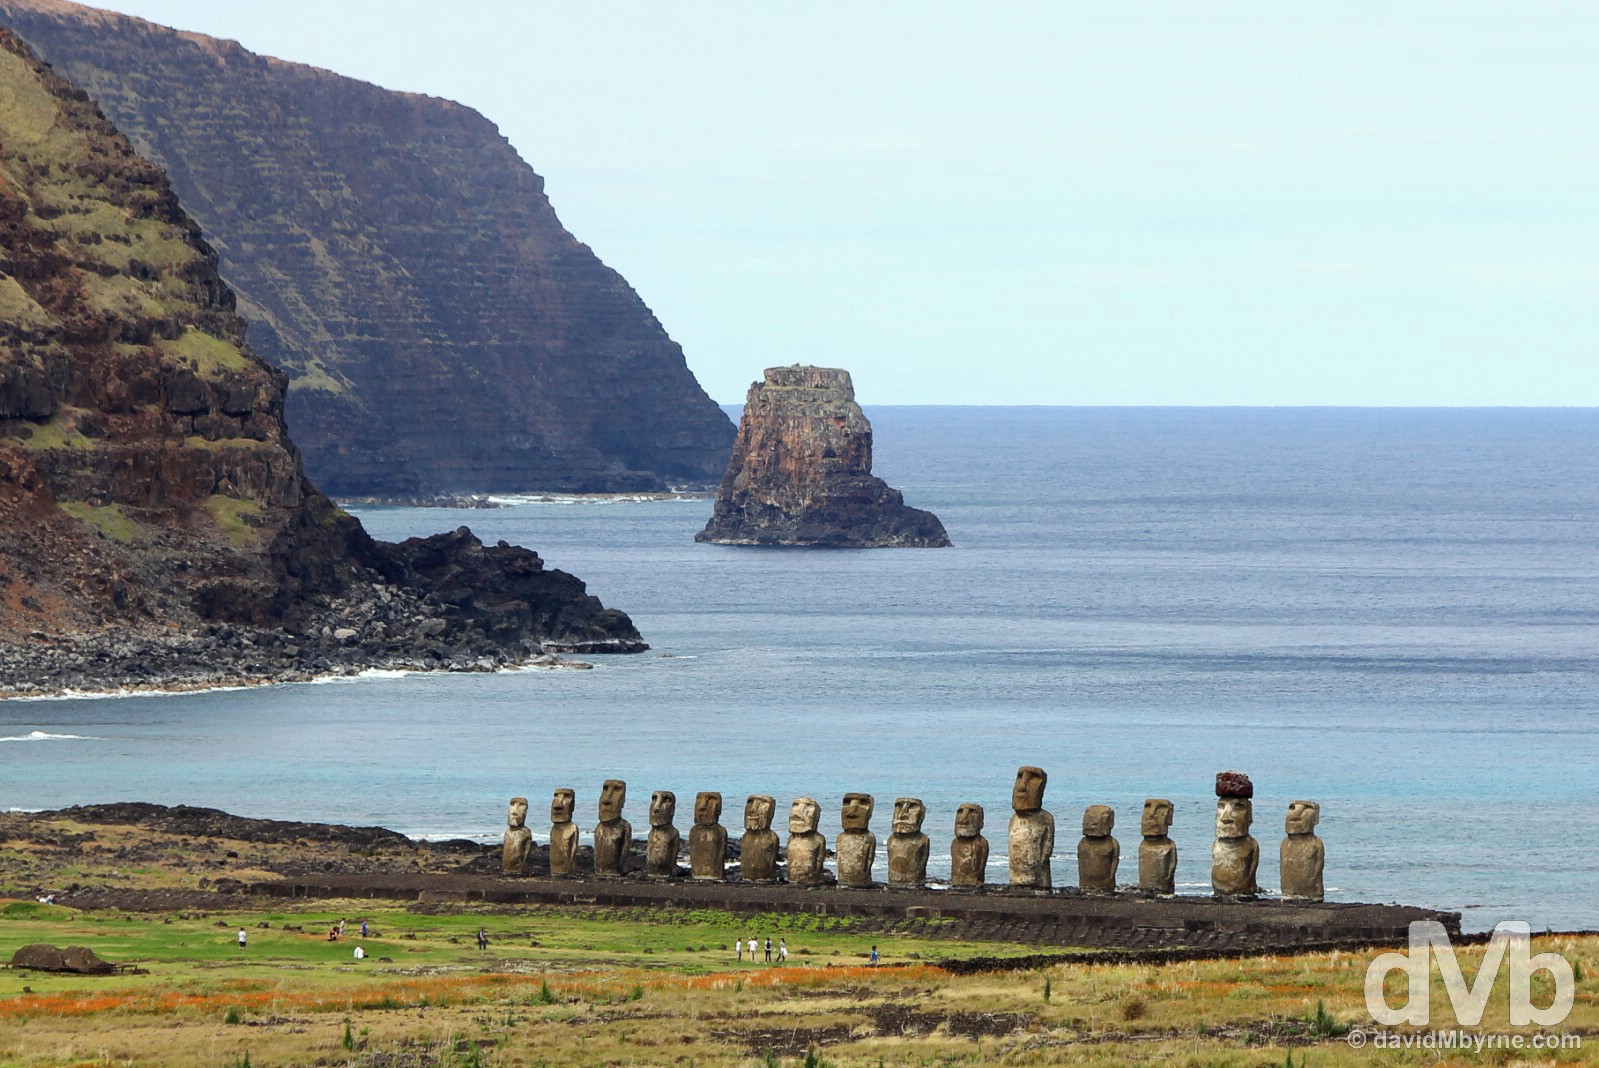 Ahu Tongariki as seen from Rano Raraku on Easter Island, Chile. September 29, 2015.